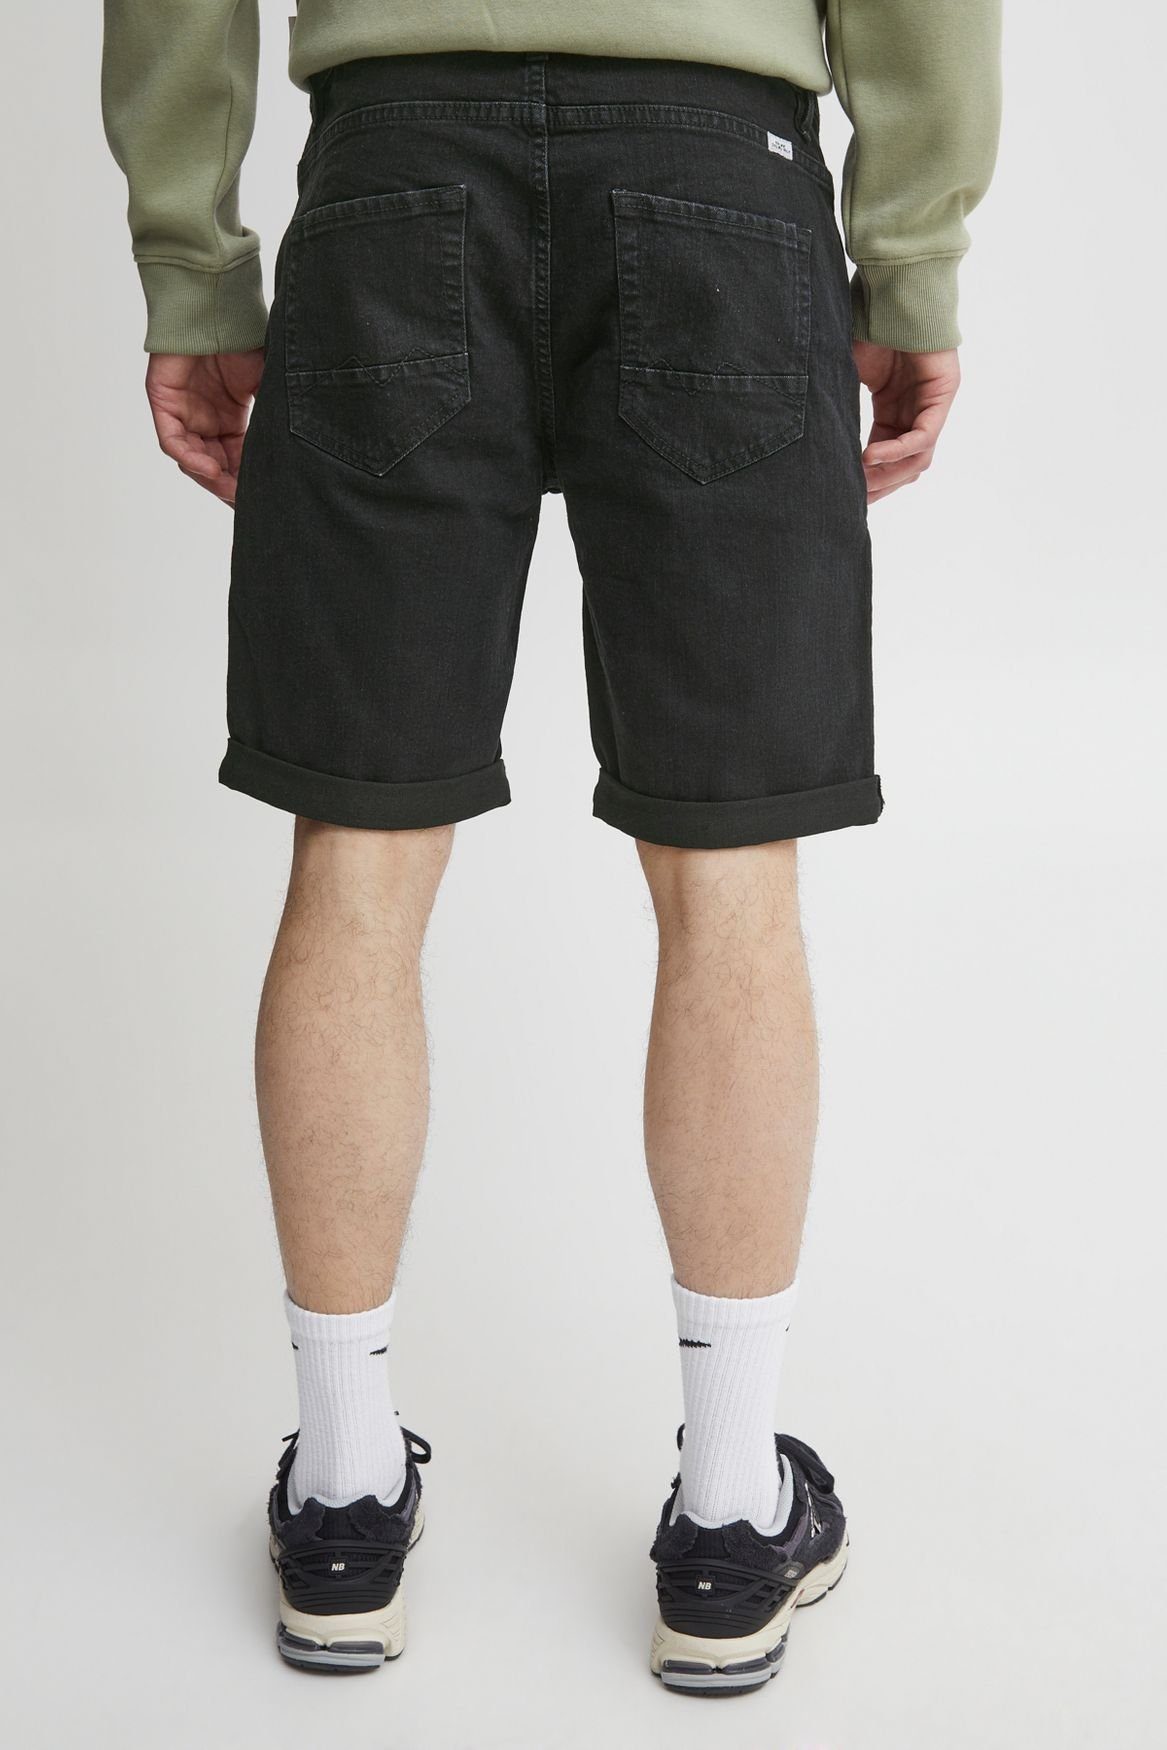 Denim Bermuda Jeans 5087 Jeansshorts Schwarz Blend in Hose 3/4 Capri Shorts